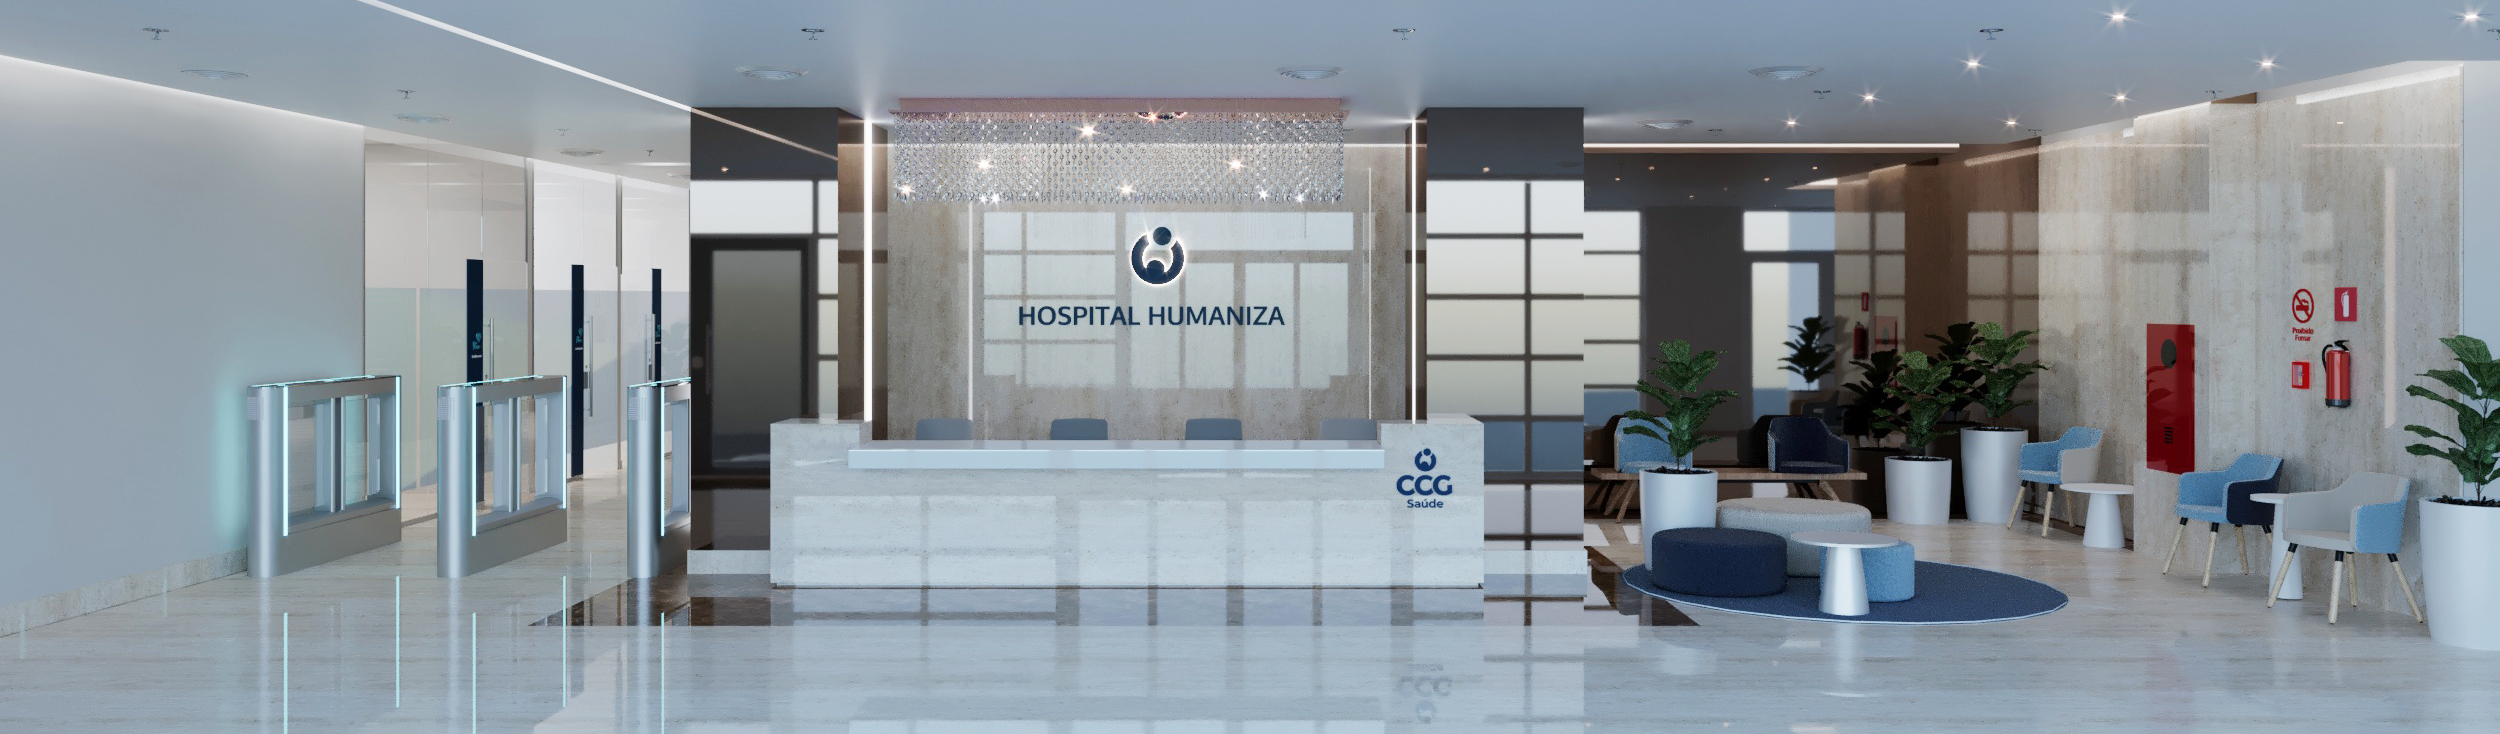 Hospital Humaniza CCG Saúde